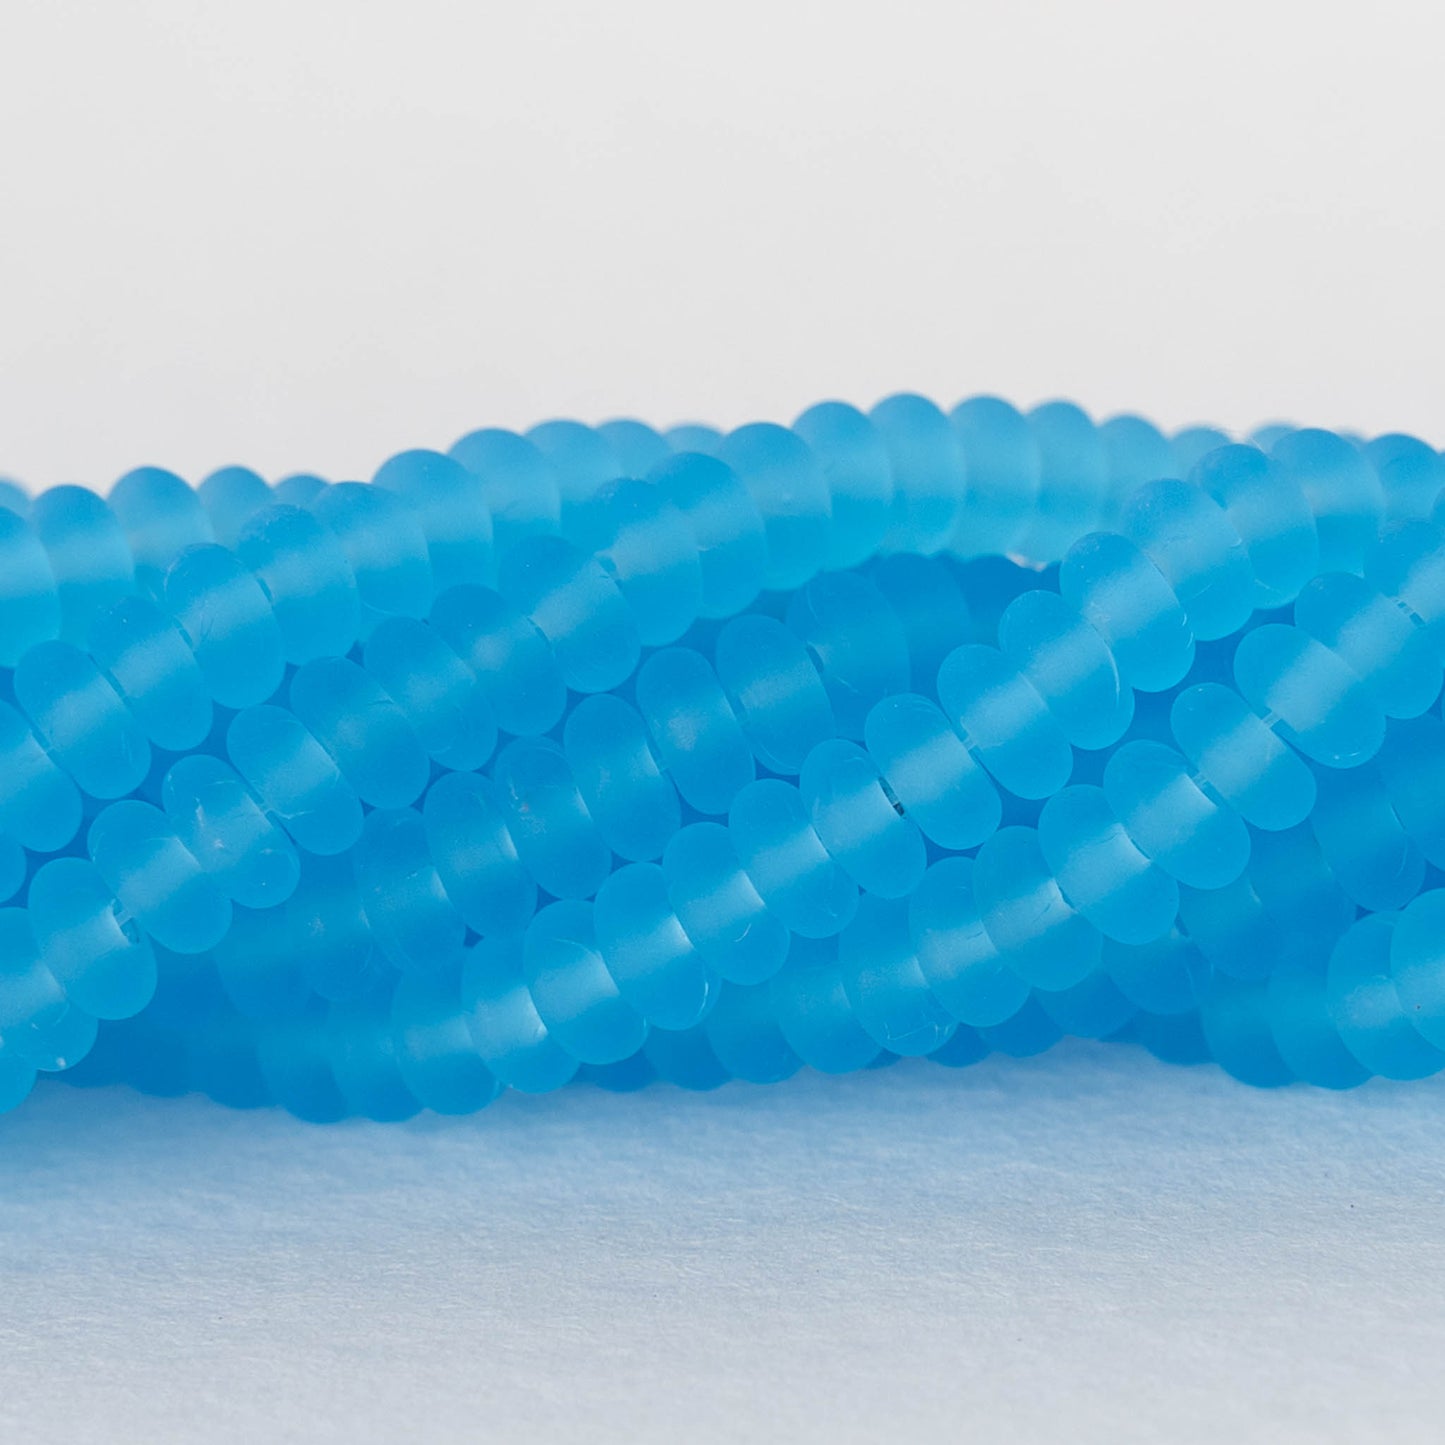 4mm Rondelle Beads - Aqua Blue - 100 Beads